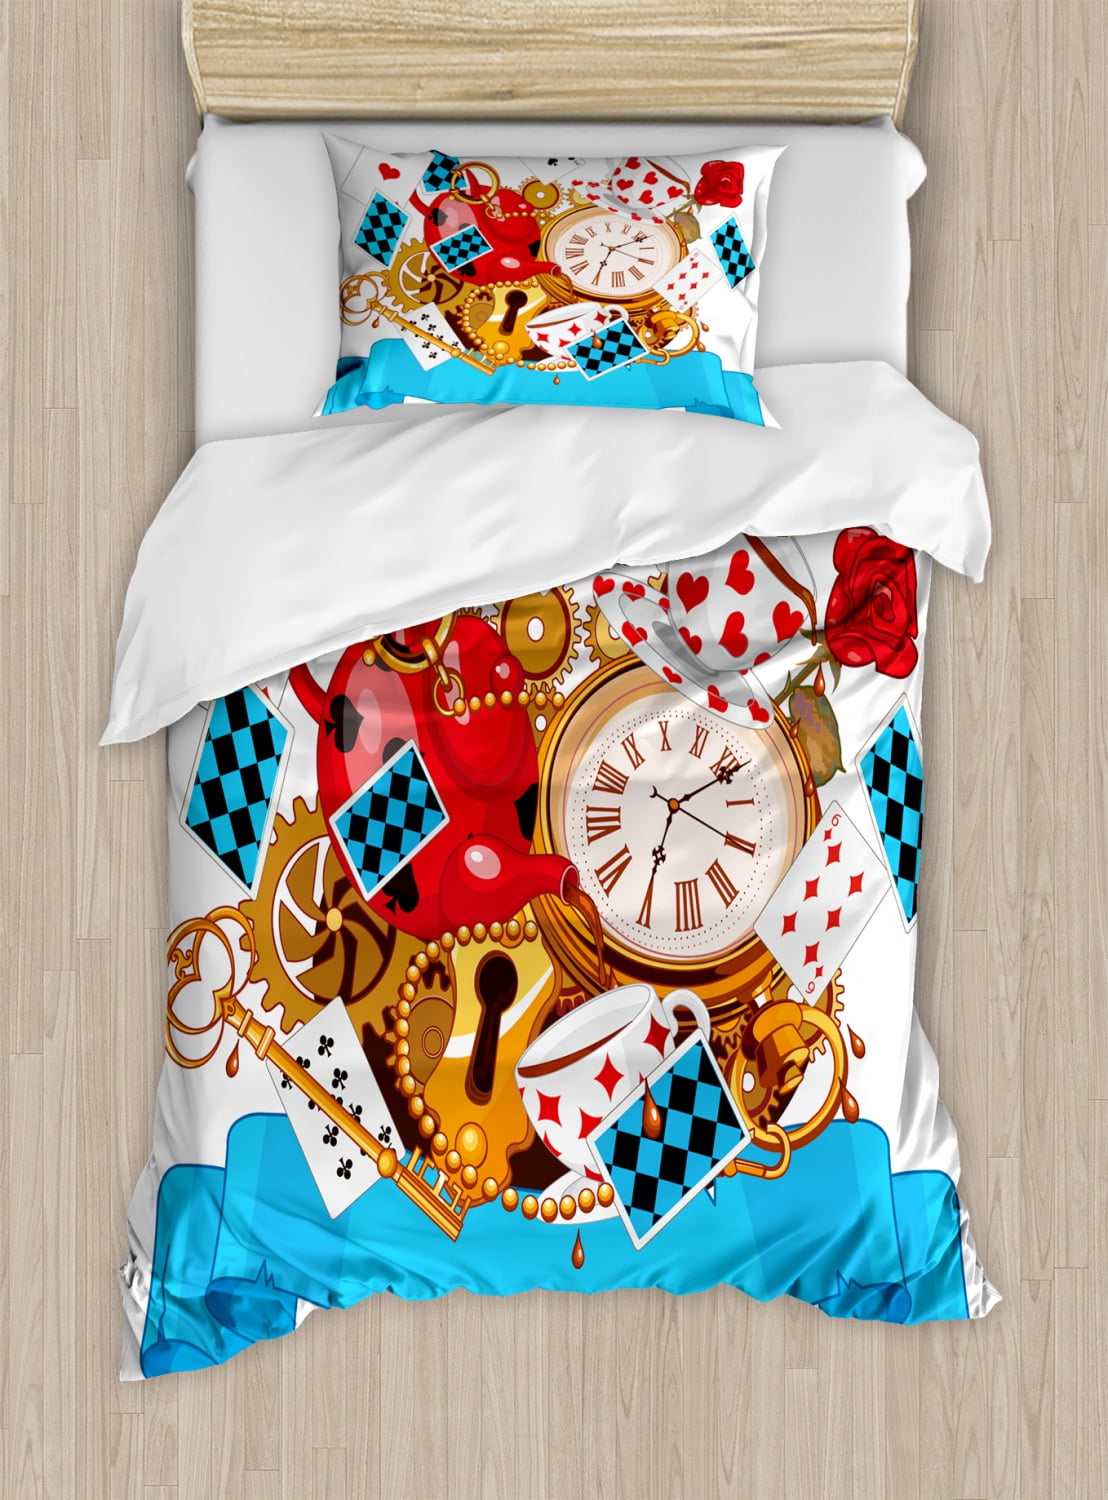 Mad Design of Cards Clocks Tea Pots Keys Flowers Fantasy World Artwork Ambesonne Alice in Wonderland Duvet Cover Set King Size Multicolor Decorative 3 Piece Bedding Set with 2 Pillow Shams